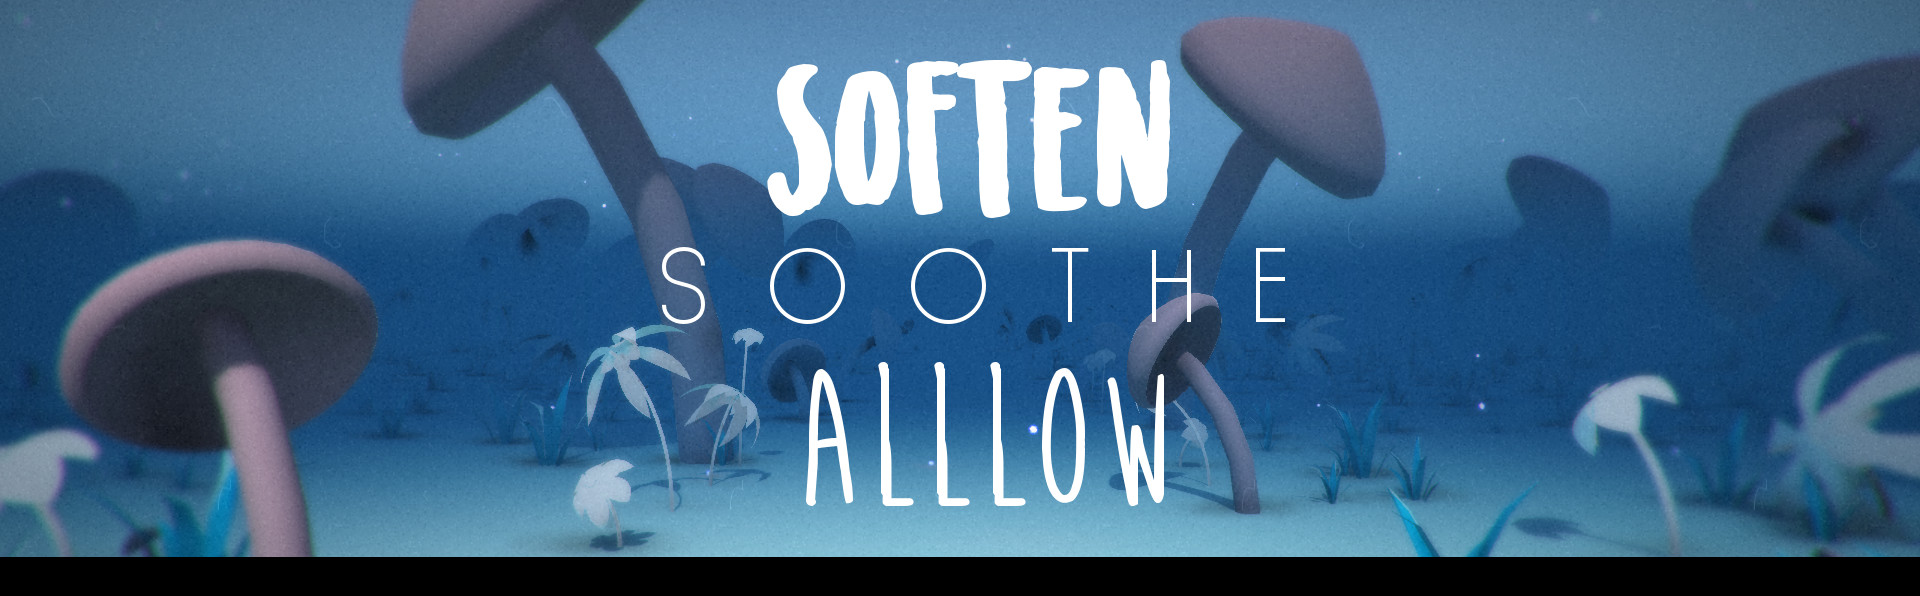 Soften, Soothe, Allow